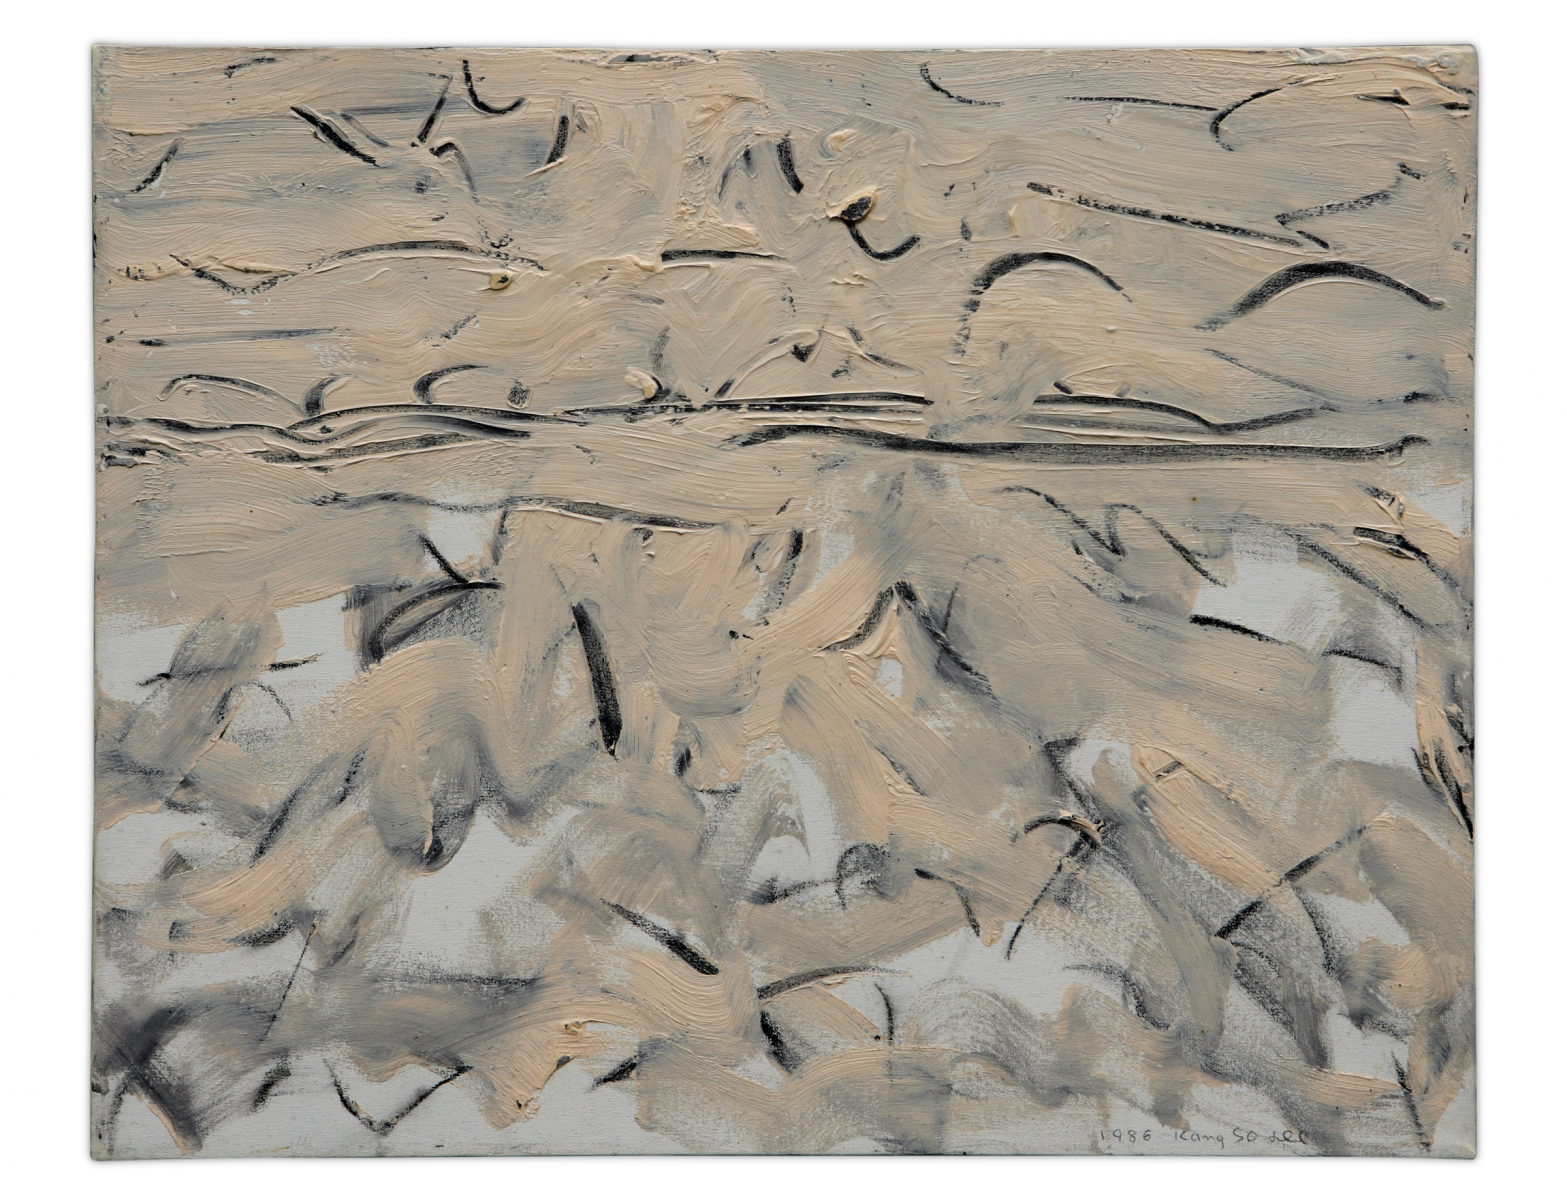 The Horizon-86015, 1986, Oil on Canvas, 60x76cm